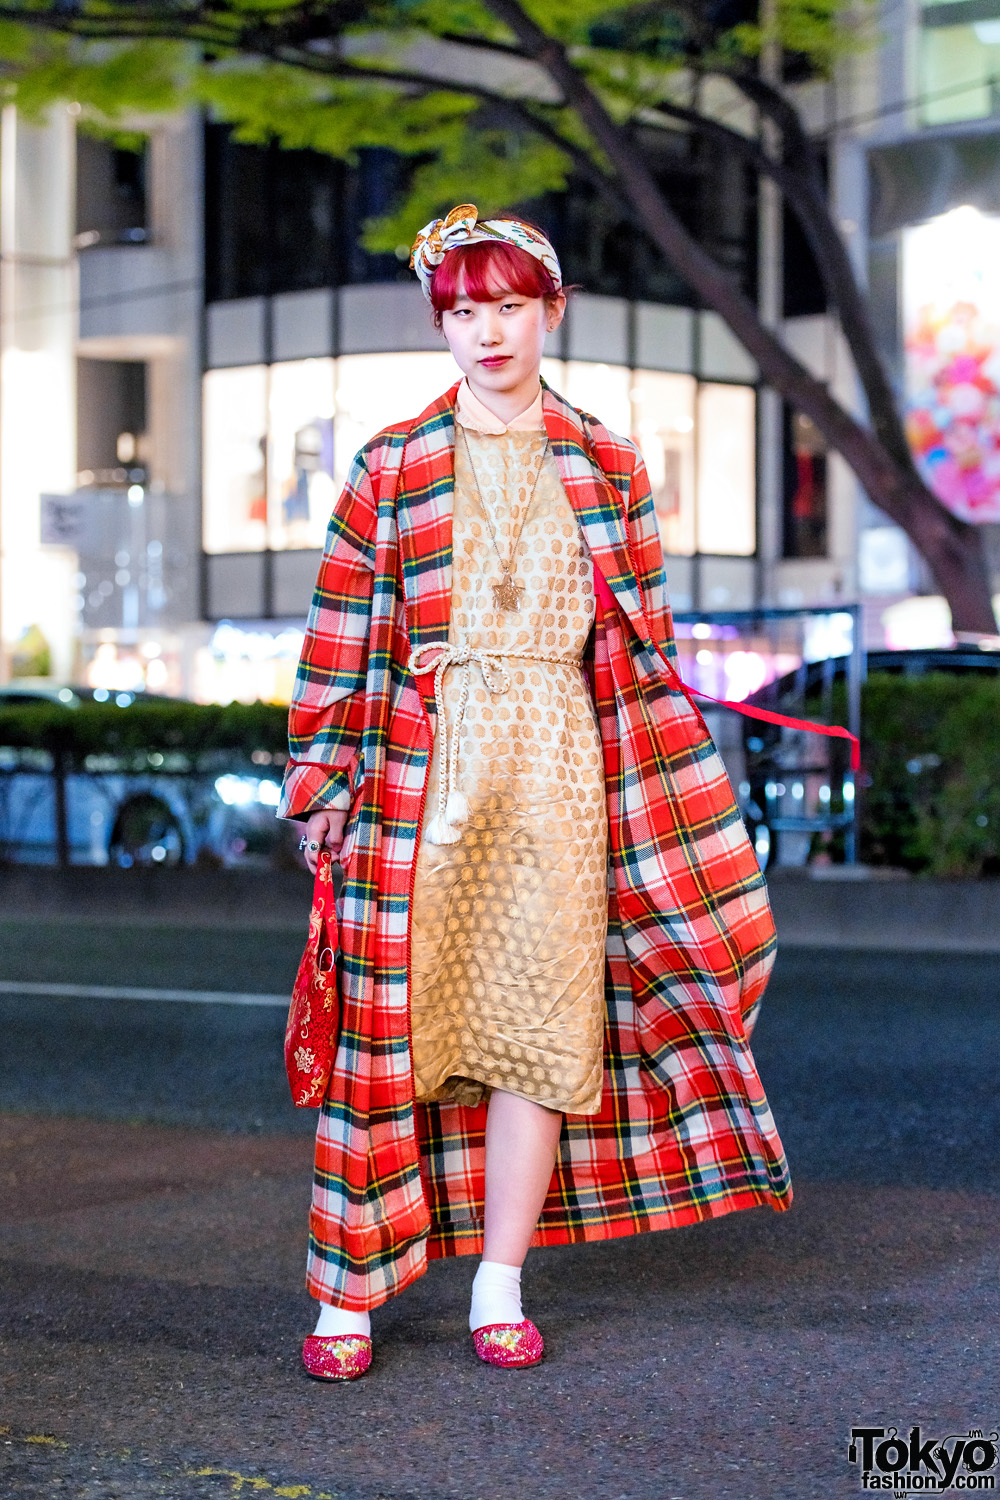 Retro Vintage Harajuku Fashion w/ Long Plaid Coat, Paisley Dress ...